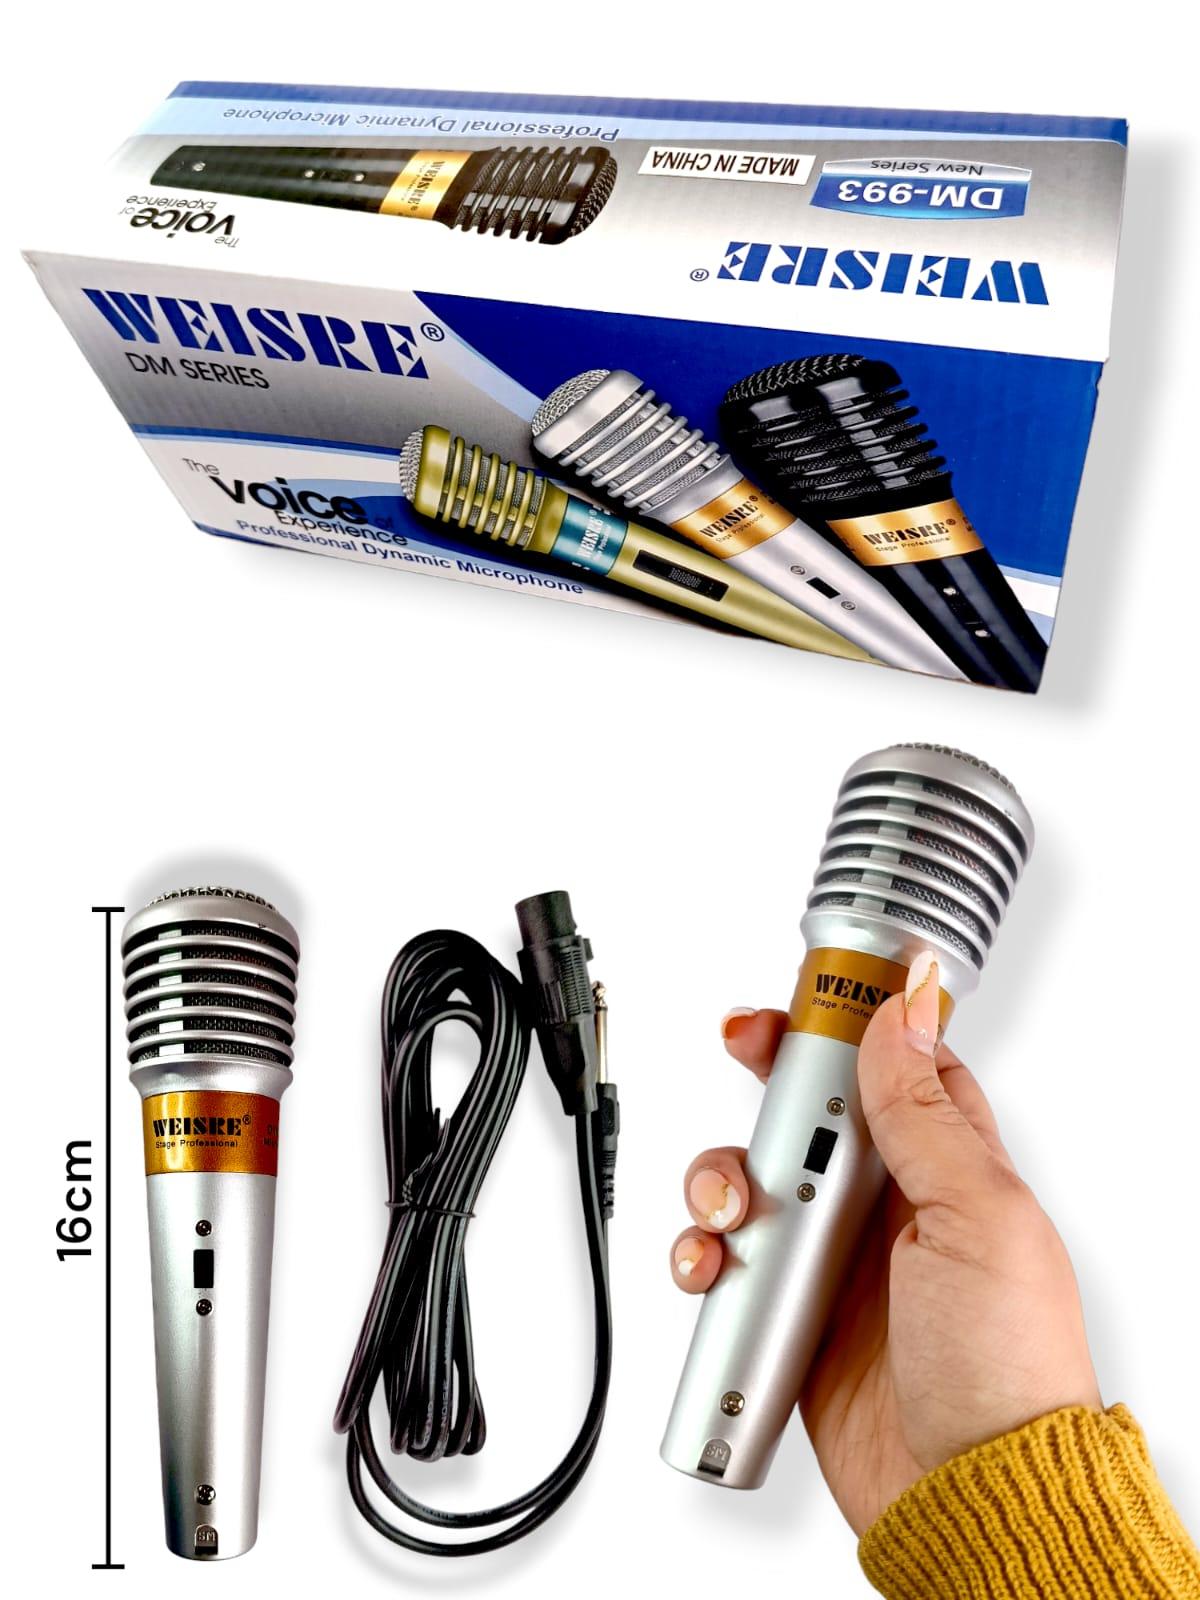 Microfono WEISRE DM Series